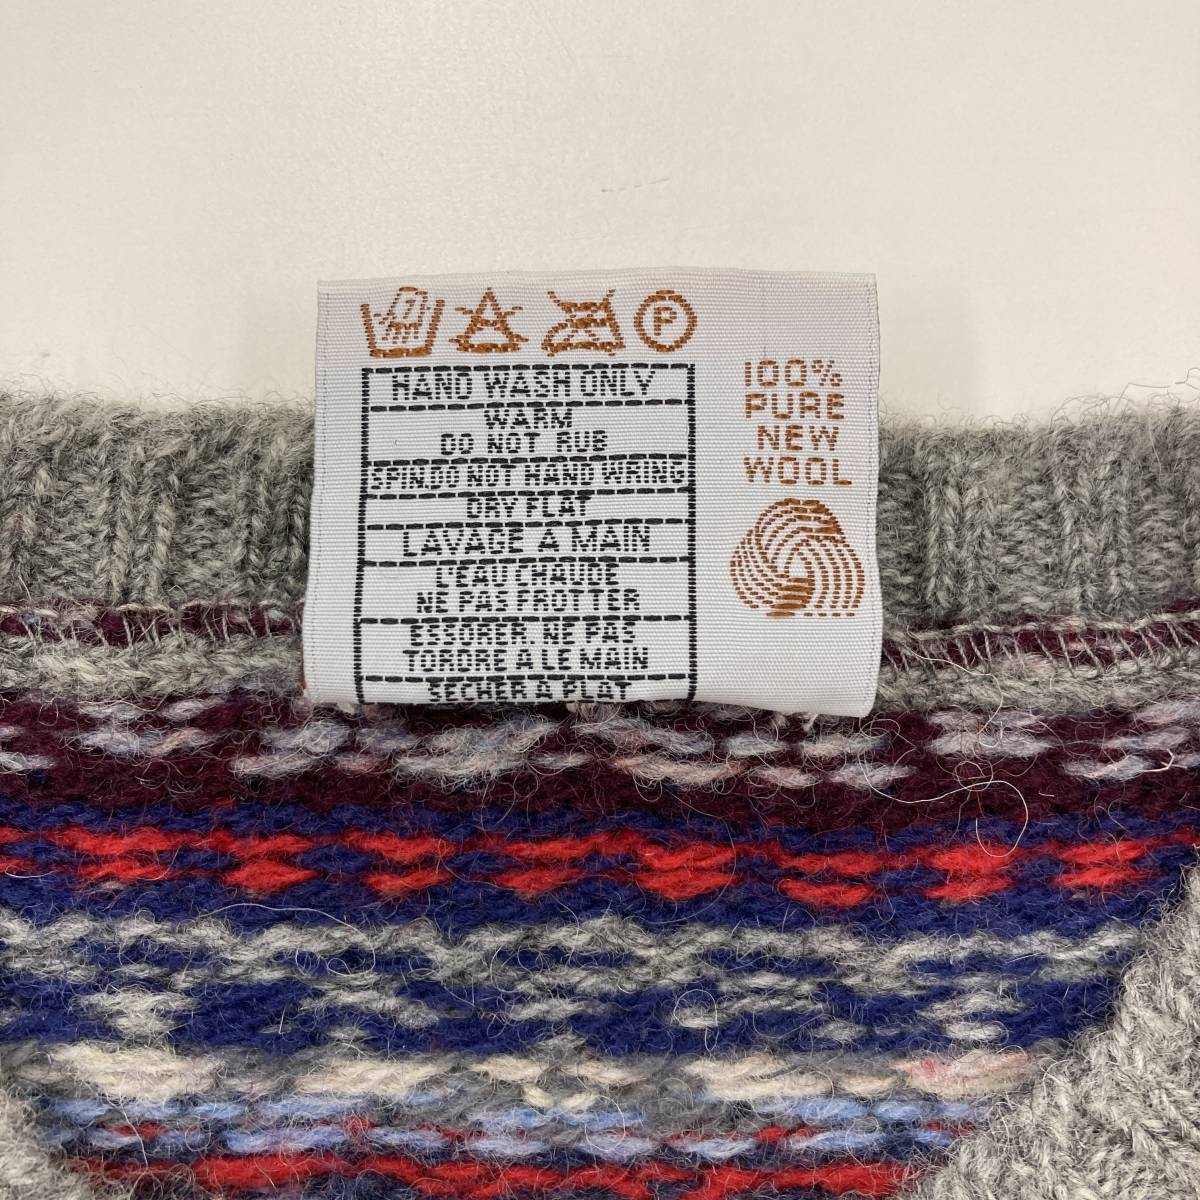 Jamieson\'sfea i-ll рисунок шерсть вязаный свитер Scotland производства M размер Jamiesonsjami-sonz общий рисунок 3110058